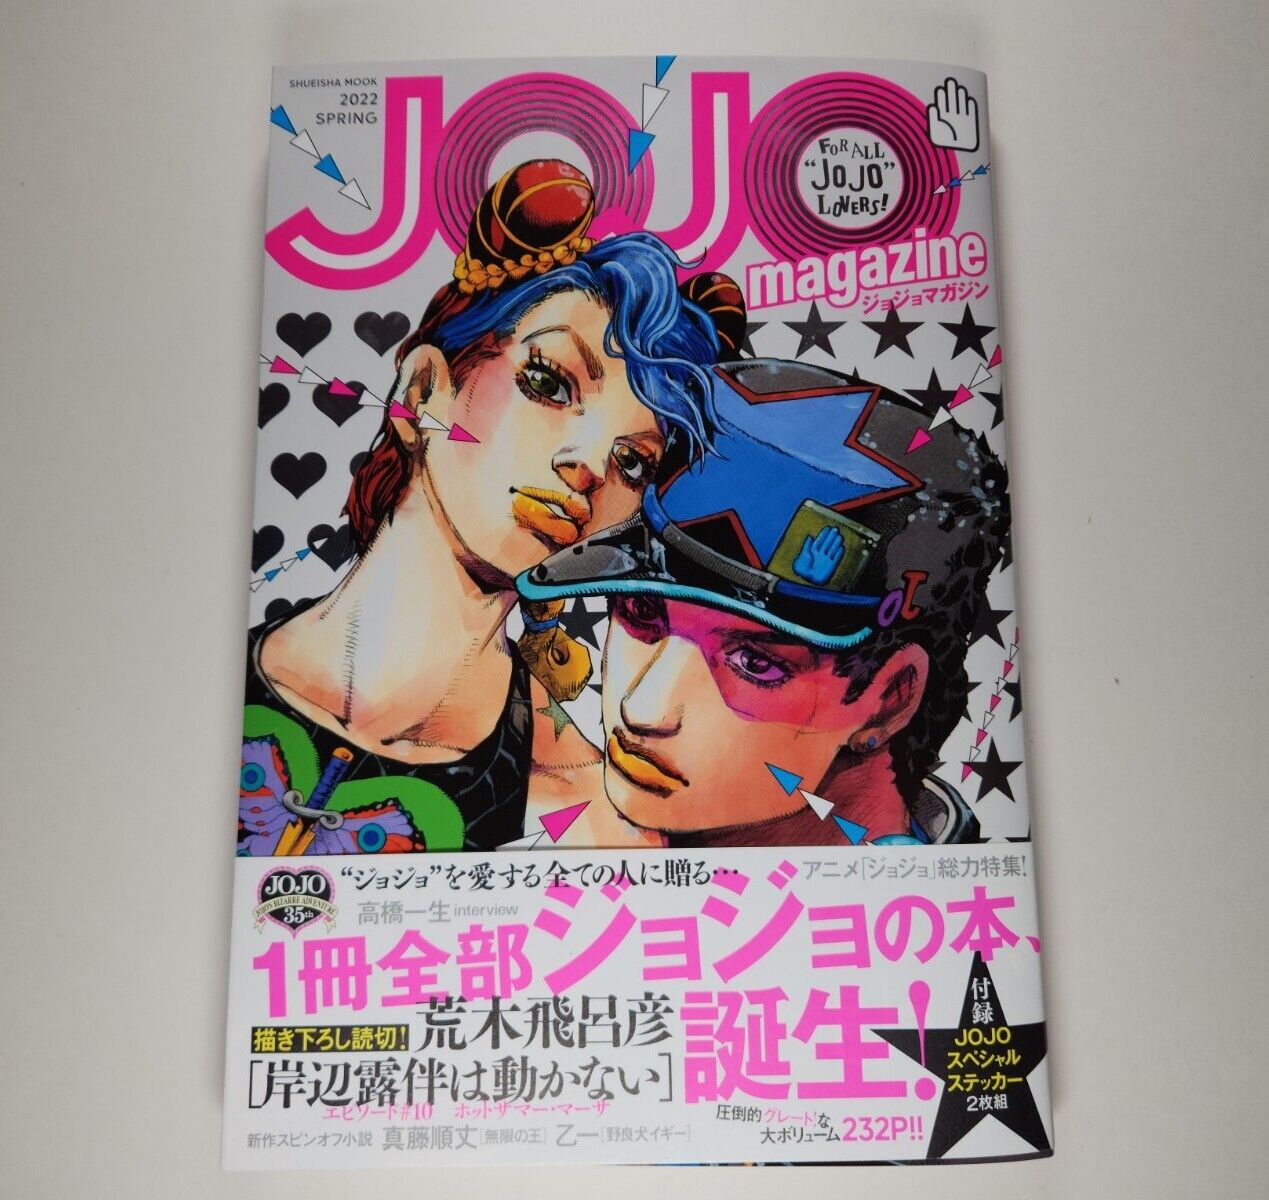 JOJO Magazine 2022 Spring 35th Anniversary Bizarre Adventure Manga Art Mook